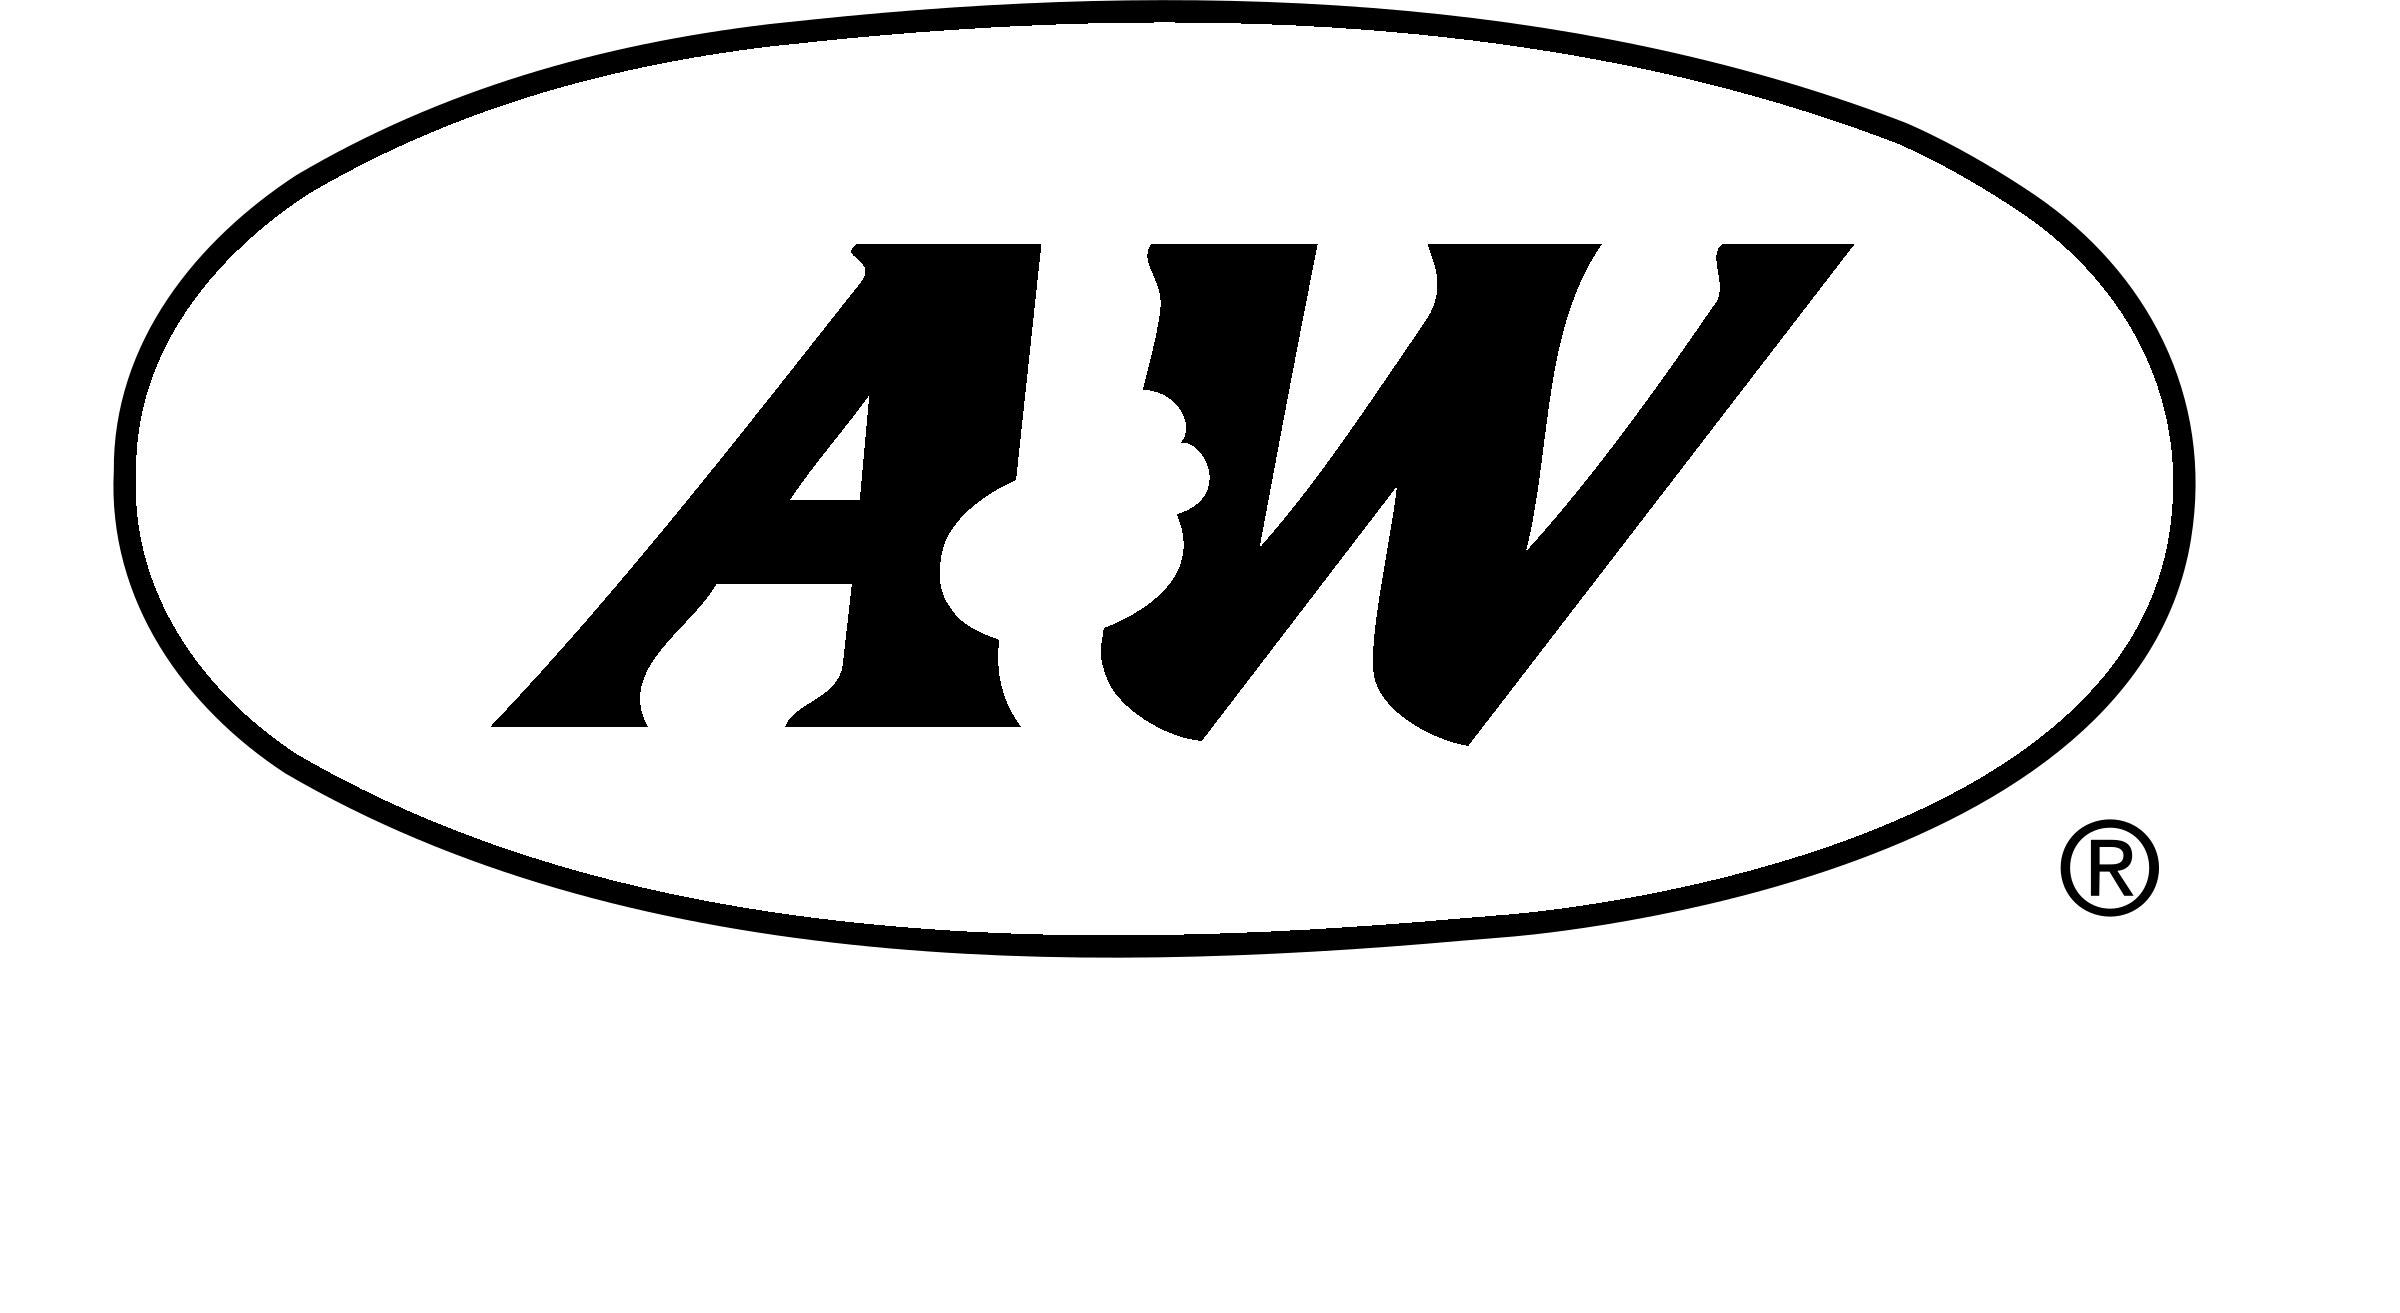 A&w All American Food Logo Black And White - Chili Dog (2400x1313)